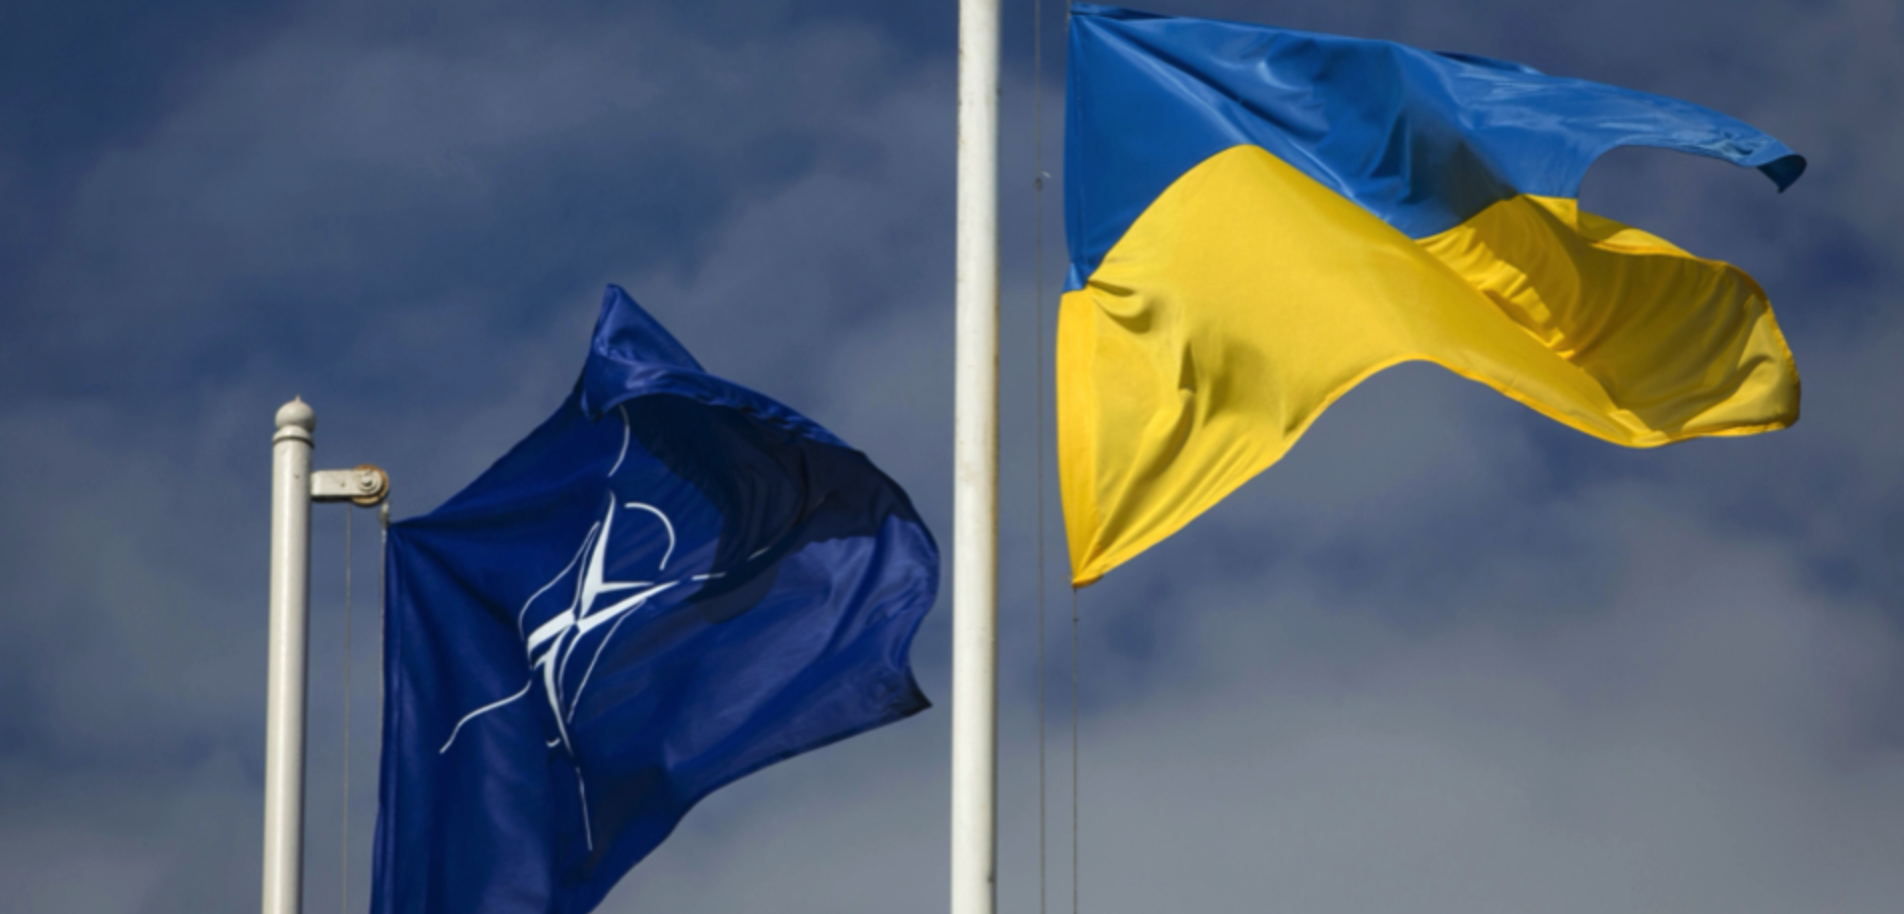 Make NATO Stronger – Invite Ukraine! Join UWC’s global campaign ahead of NATO Summit